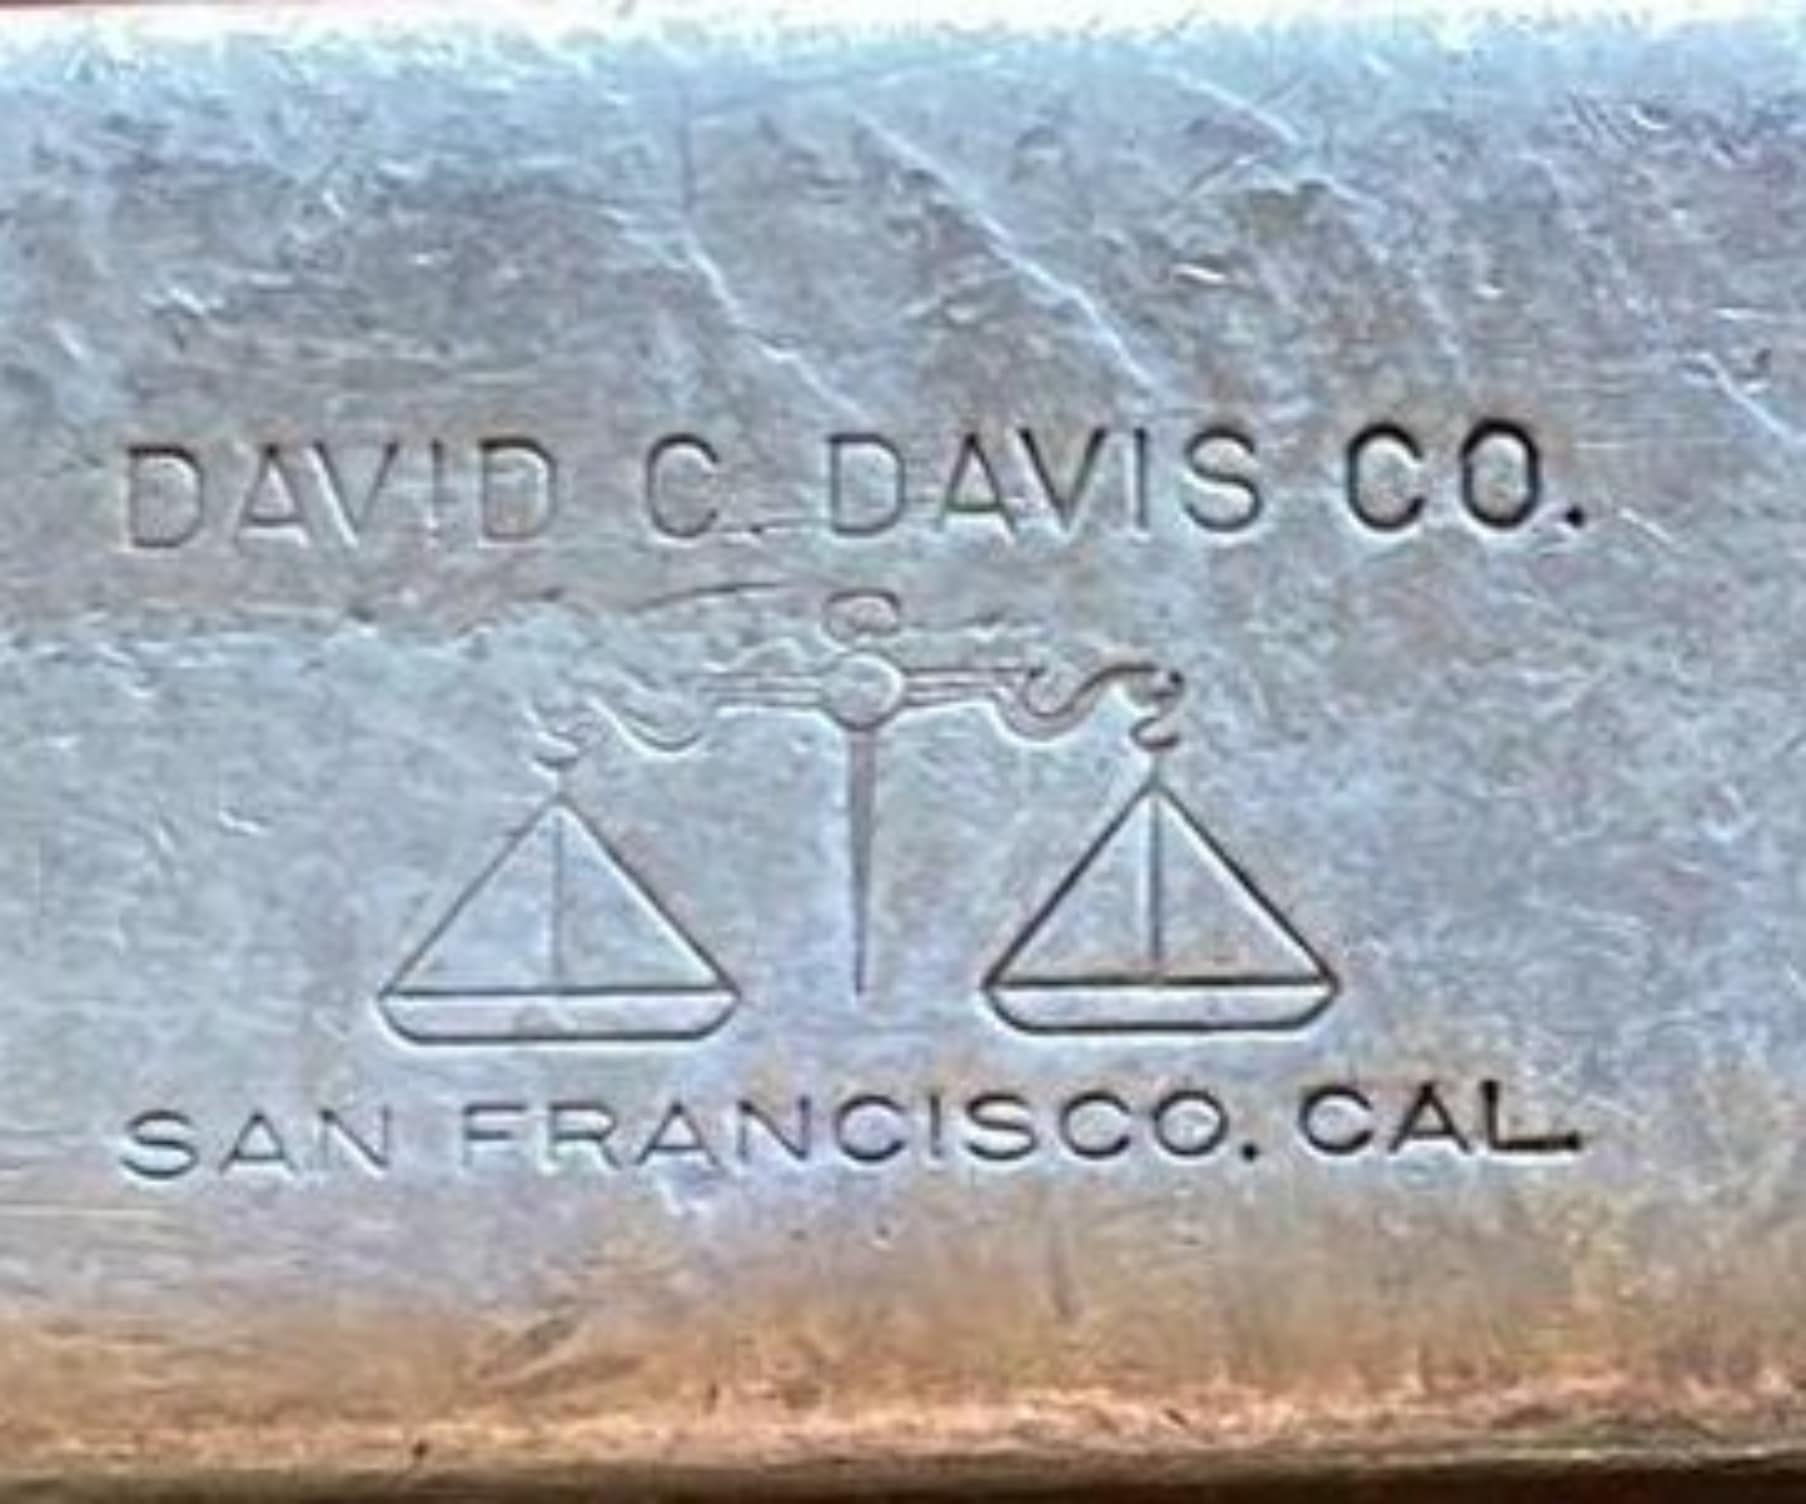 David C Davis vintage silver hallmark